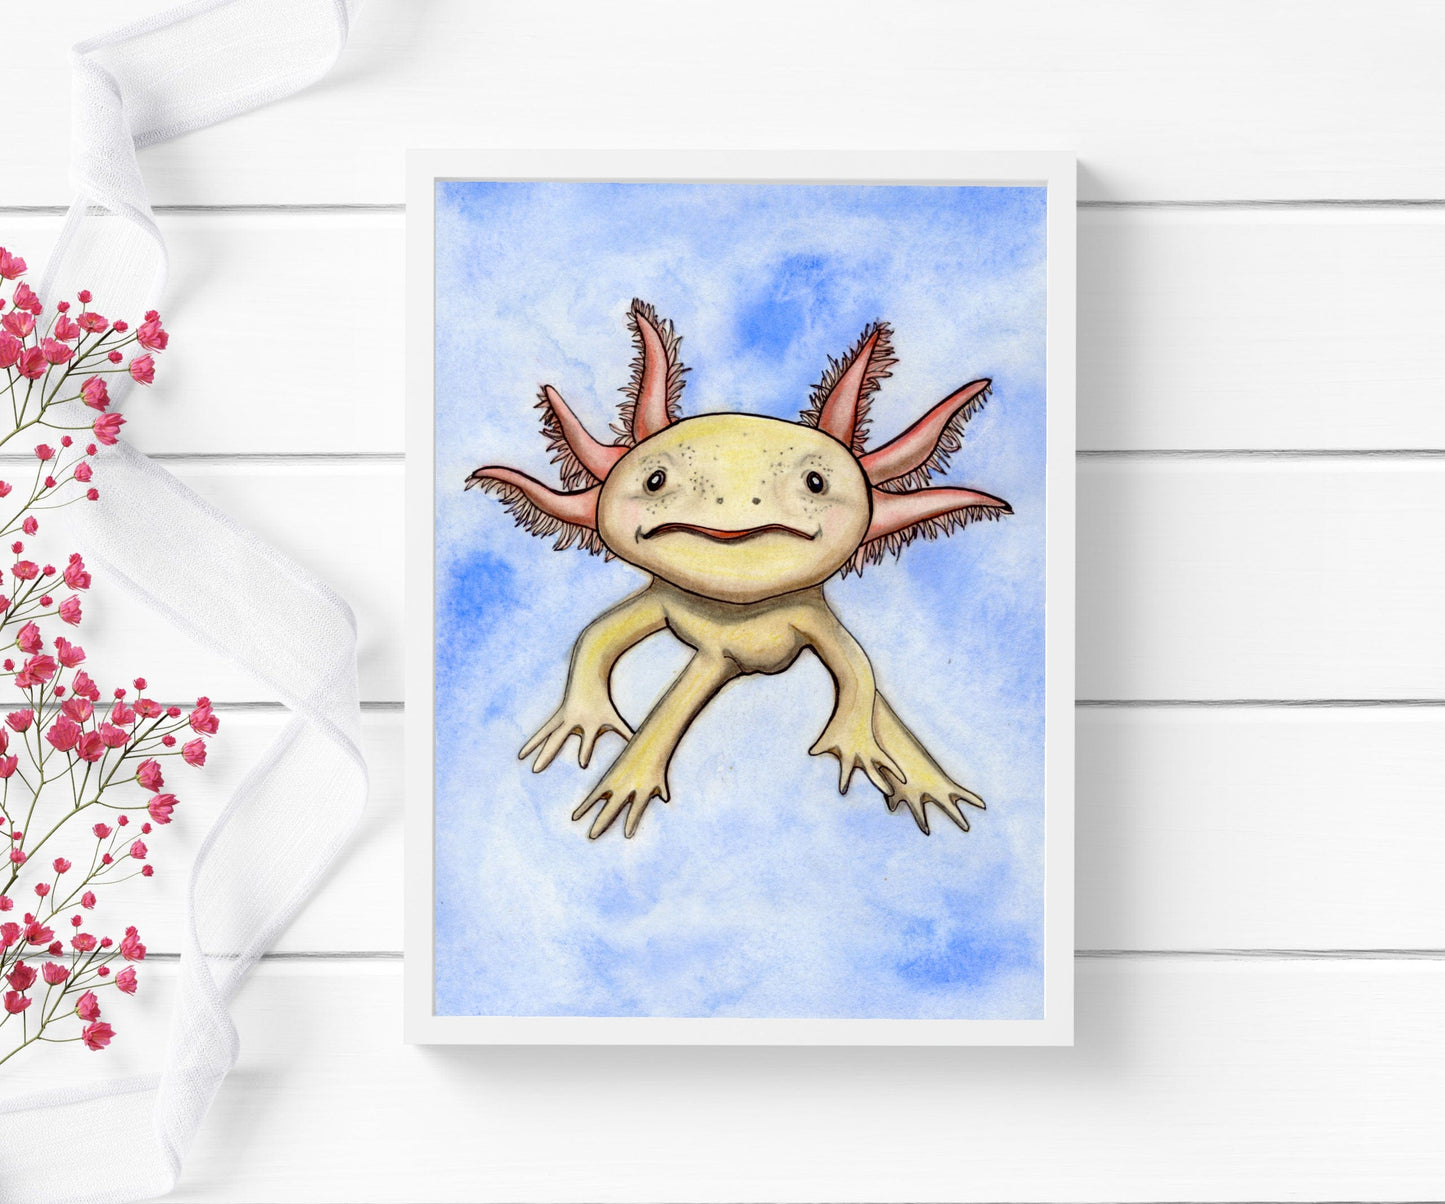 PinkPolish Design Art Prints "Axolotl Cutie " Watercolor Painting: Art Print